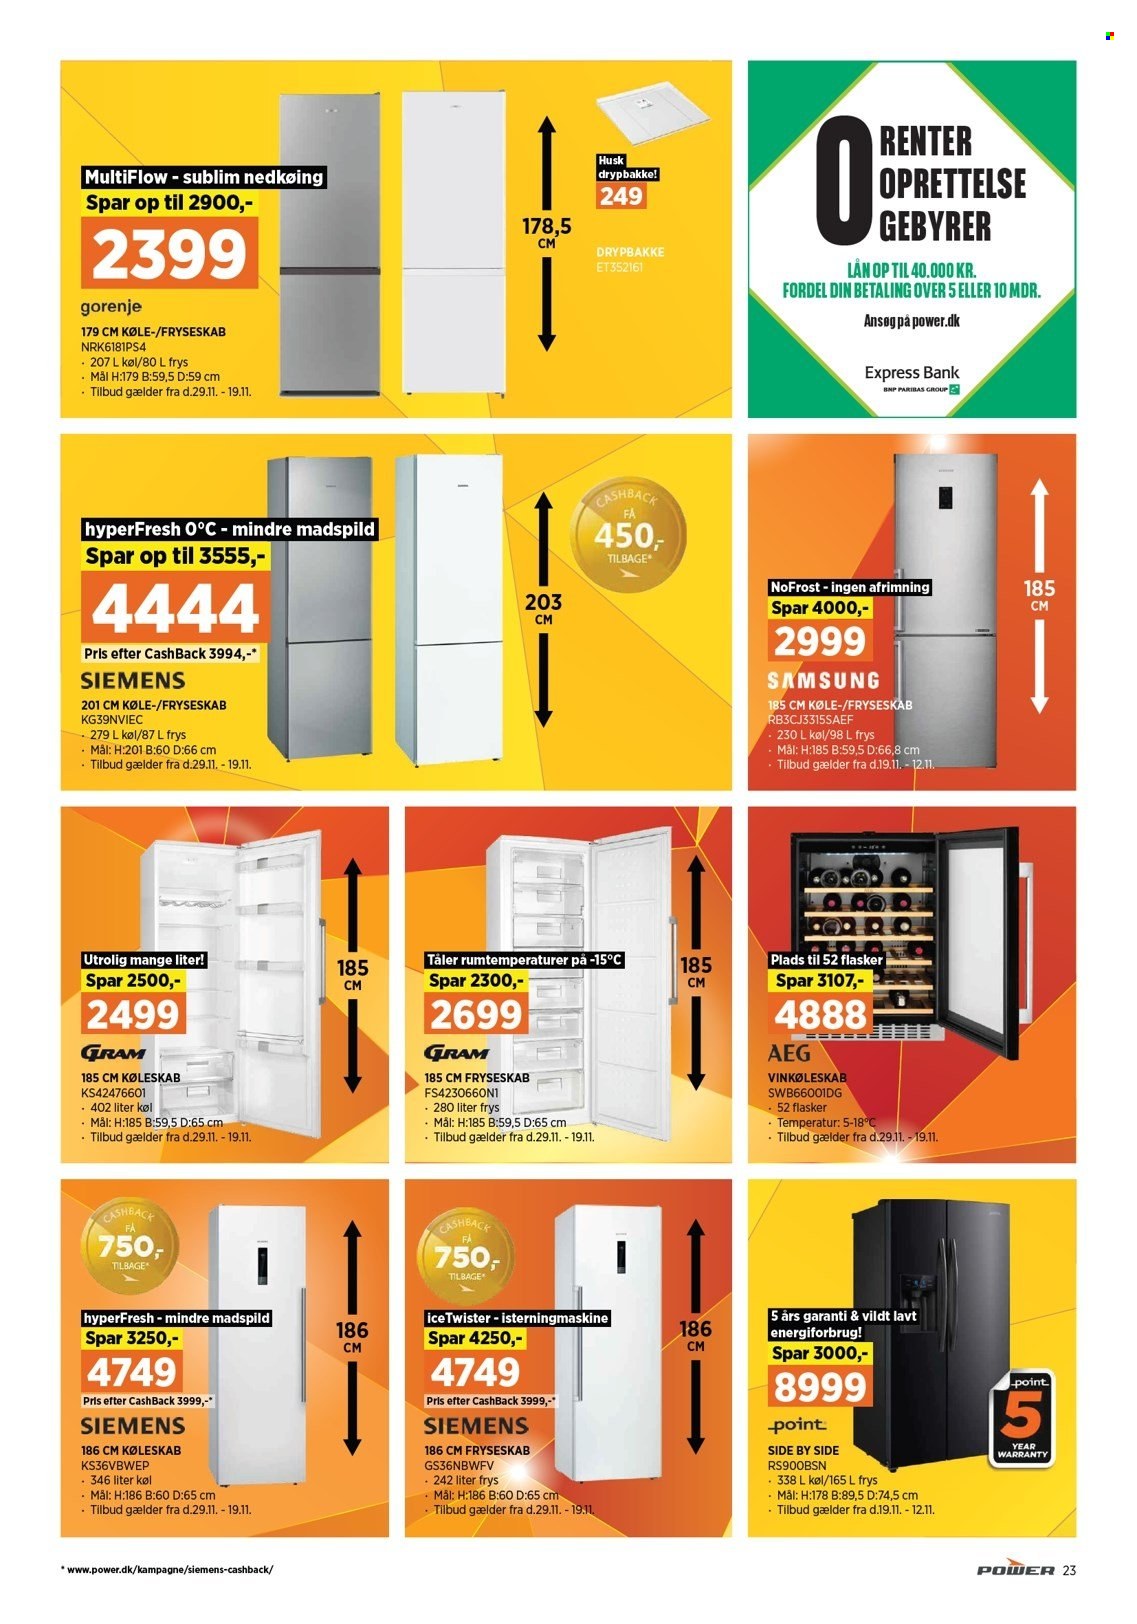 thumbnail - Power tilbud  - 29.11.2021 - 5.12.2021 - tilbudsprodukter - Samsung, AEG, Siemens, køleskab, vinkøleskab. Side 23.